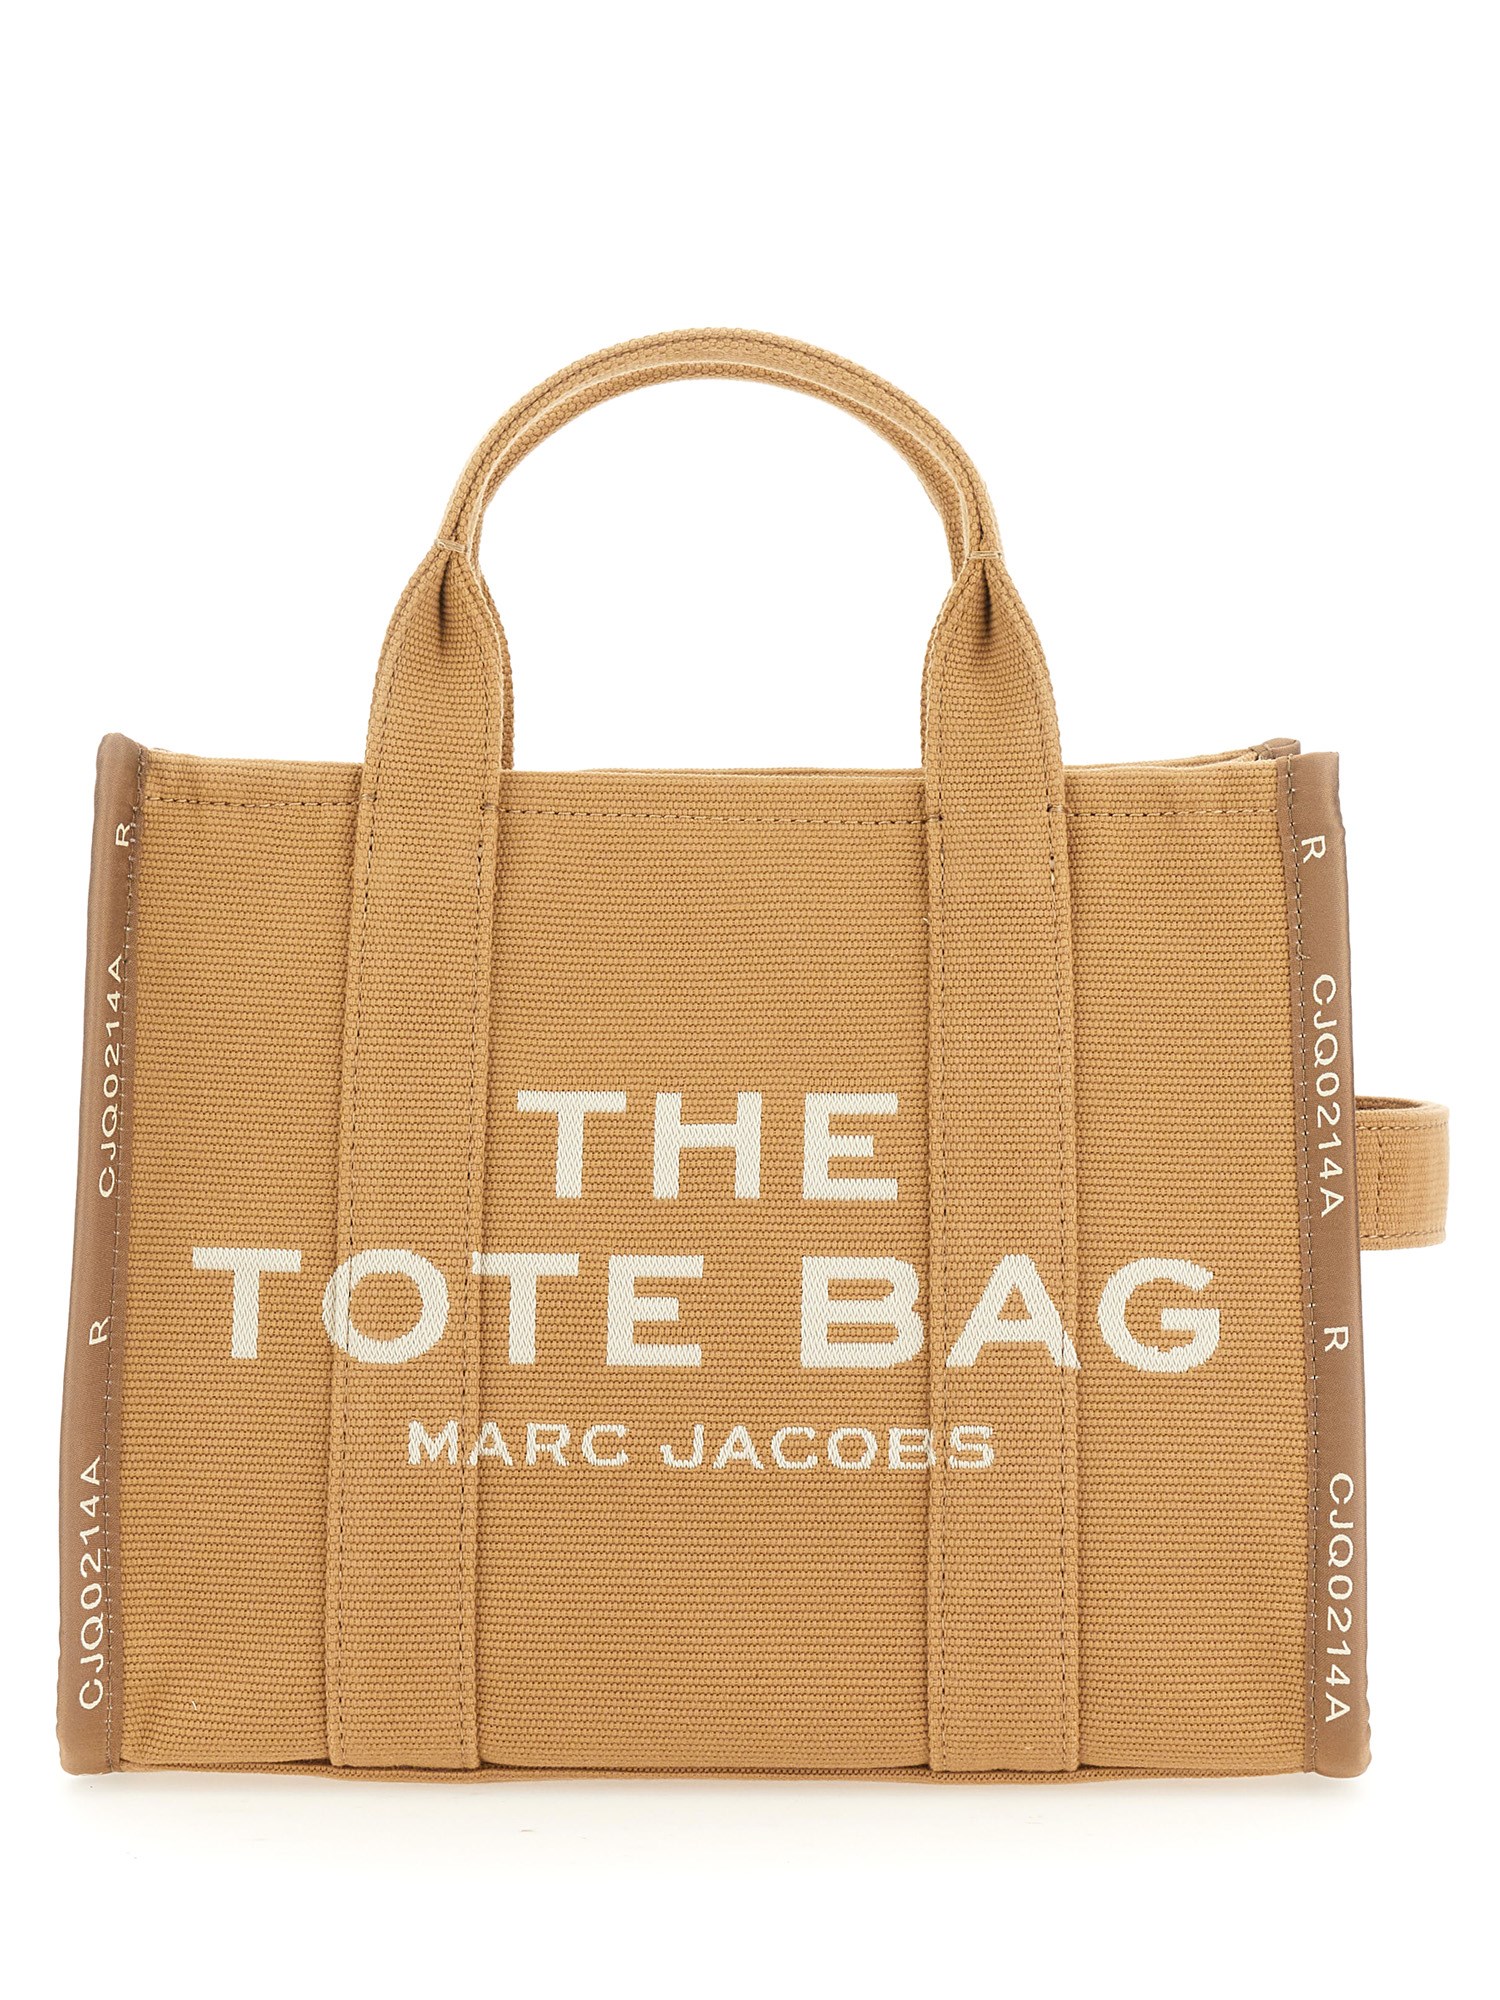 marc jacobs the tote medium bag